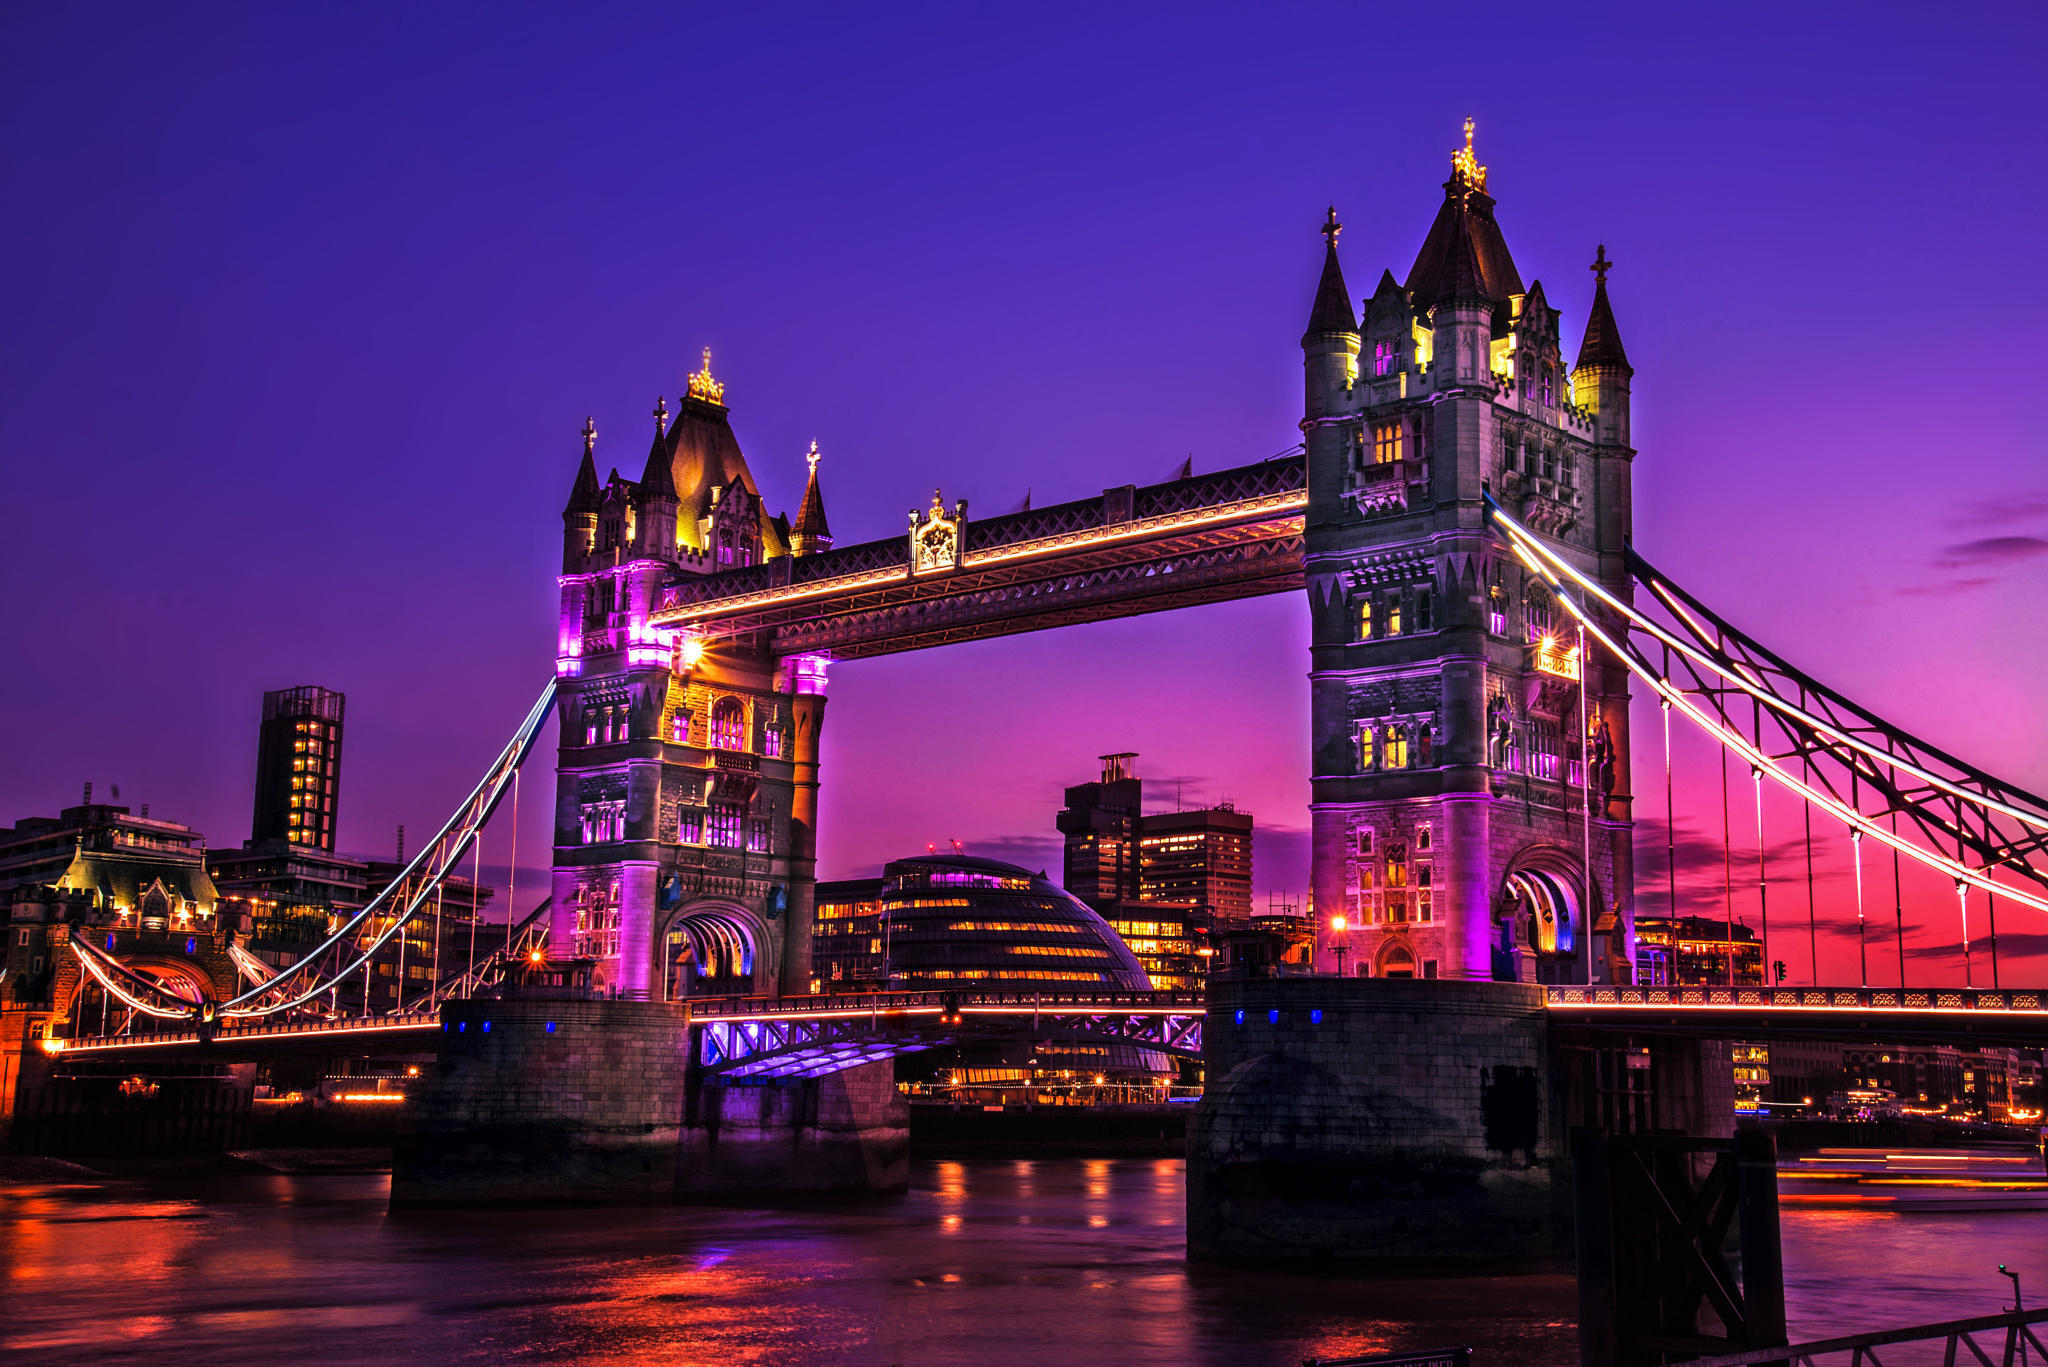 Tower Bridge sunset